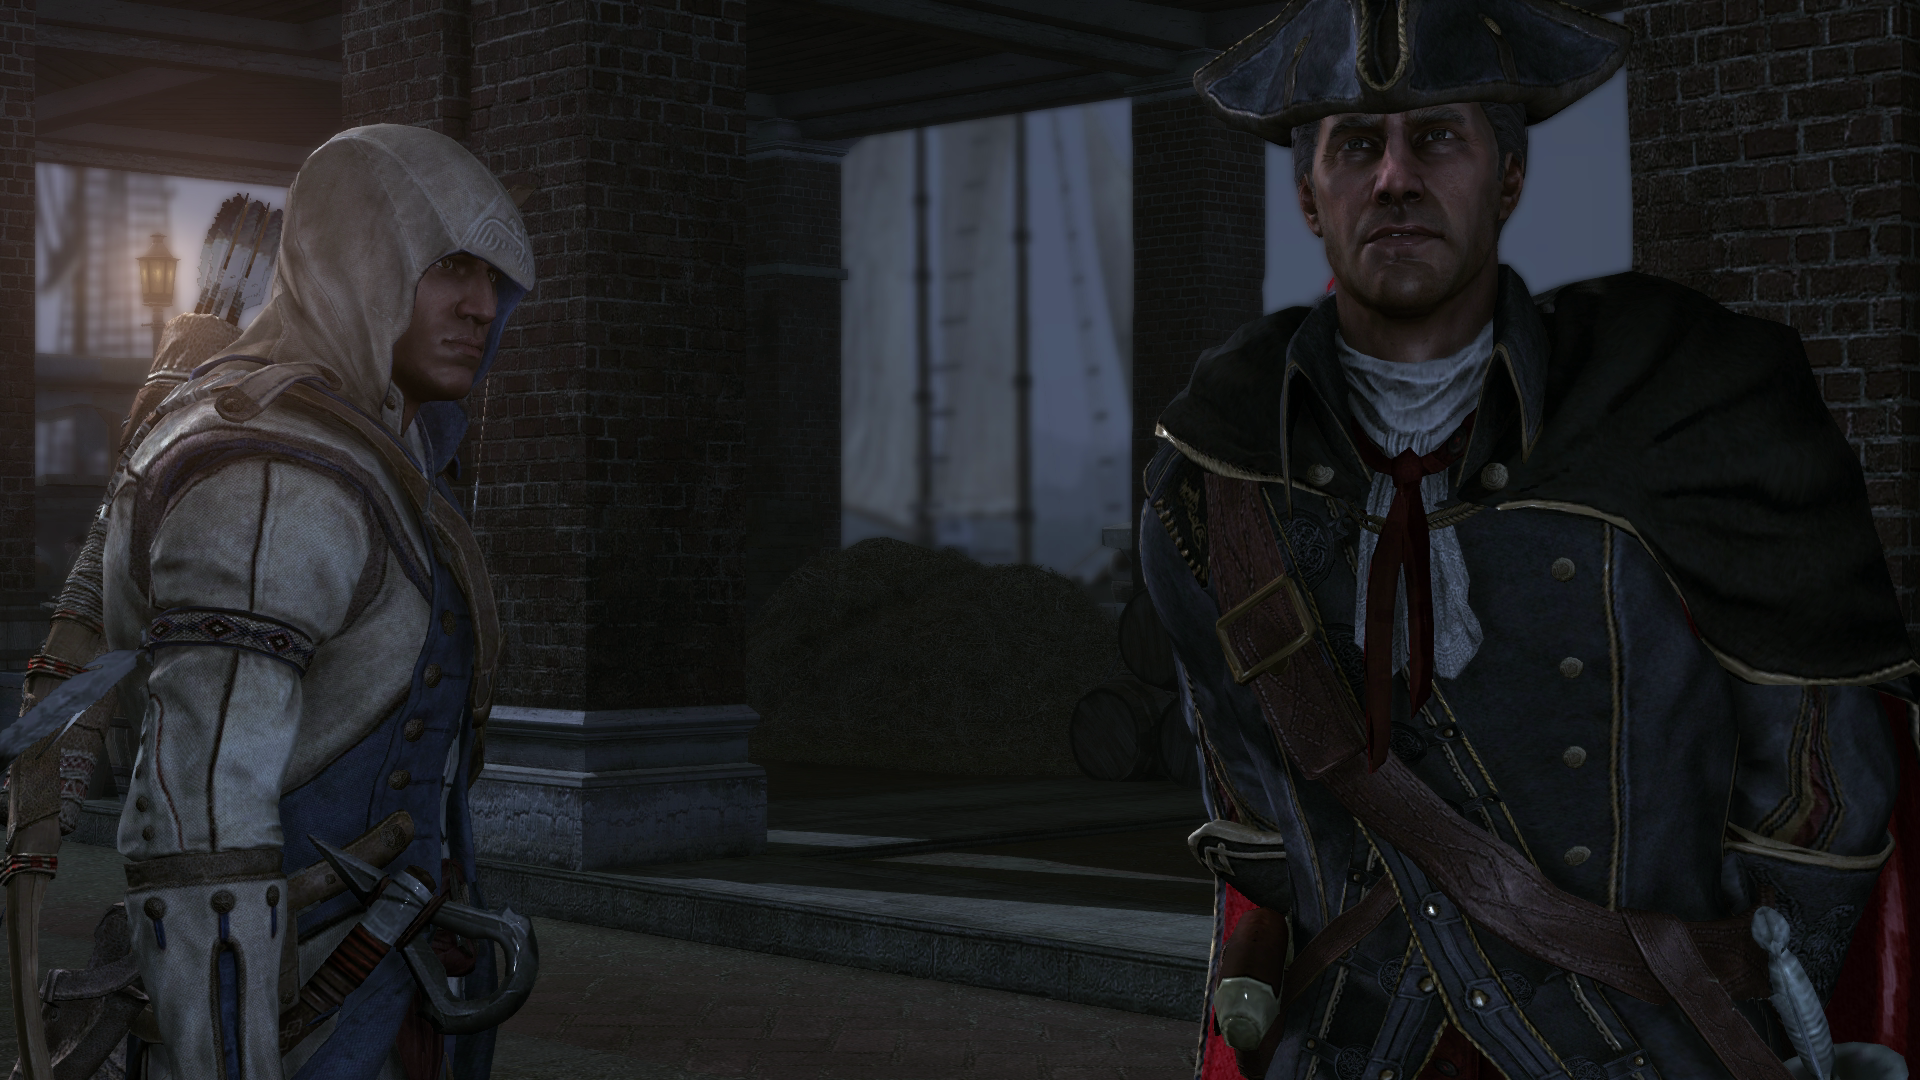 Review Assassin's Creed: Rogue  Assassins creed rogue, Filme dublado, Assassin's  creed